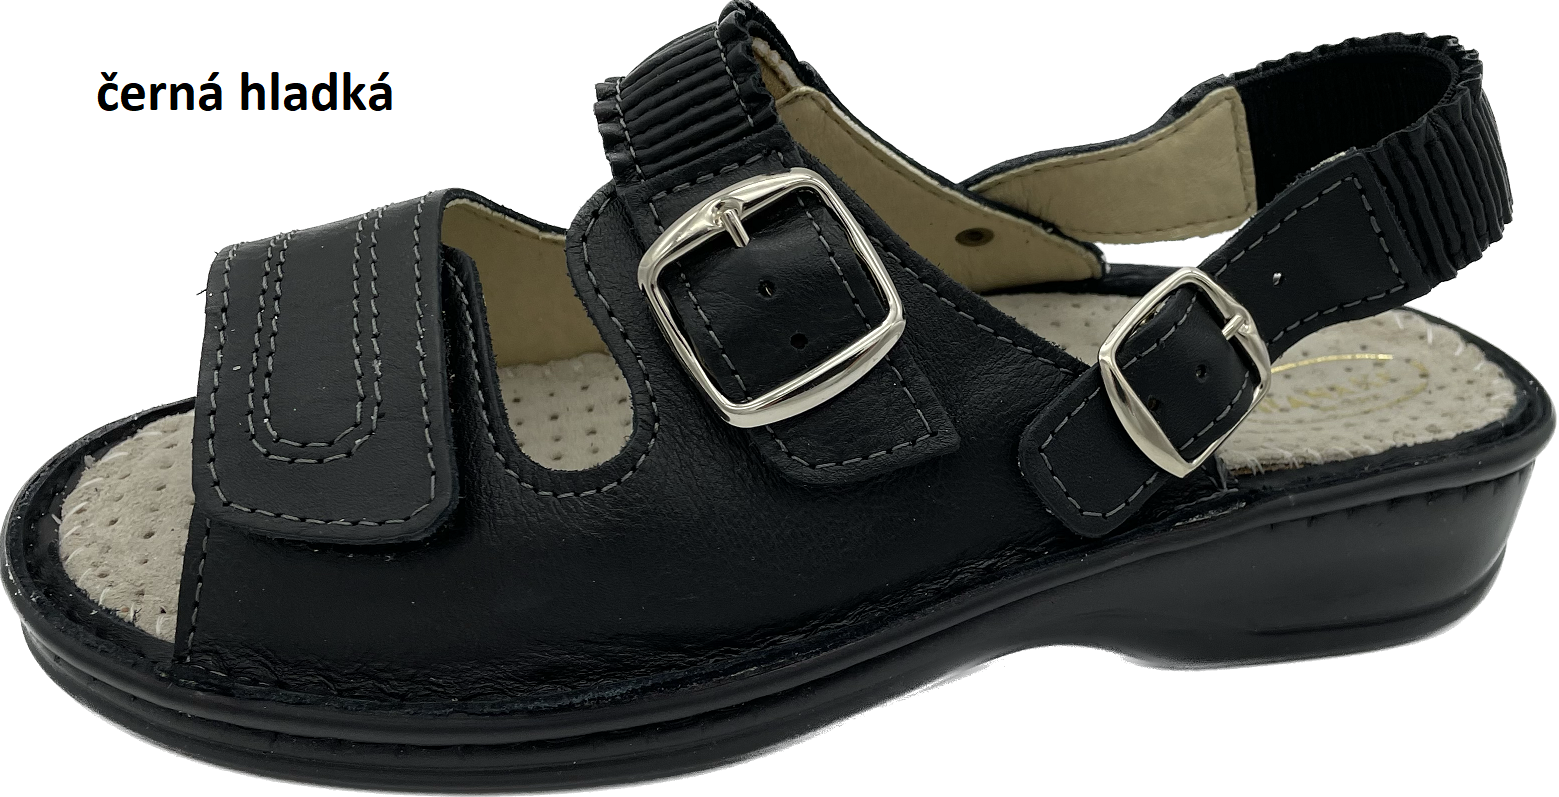 Boty Hanák vzor 305 P - černá podešev Barva usně: černobílý puntík jemný hladká, Velikosti obuvi: 35